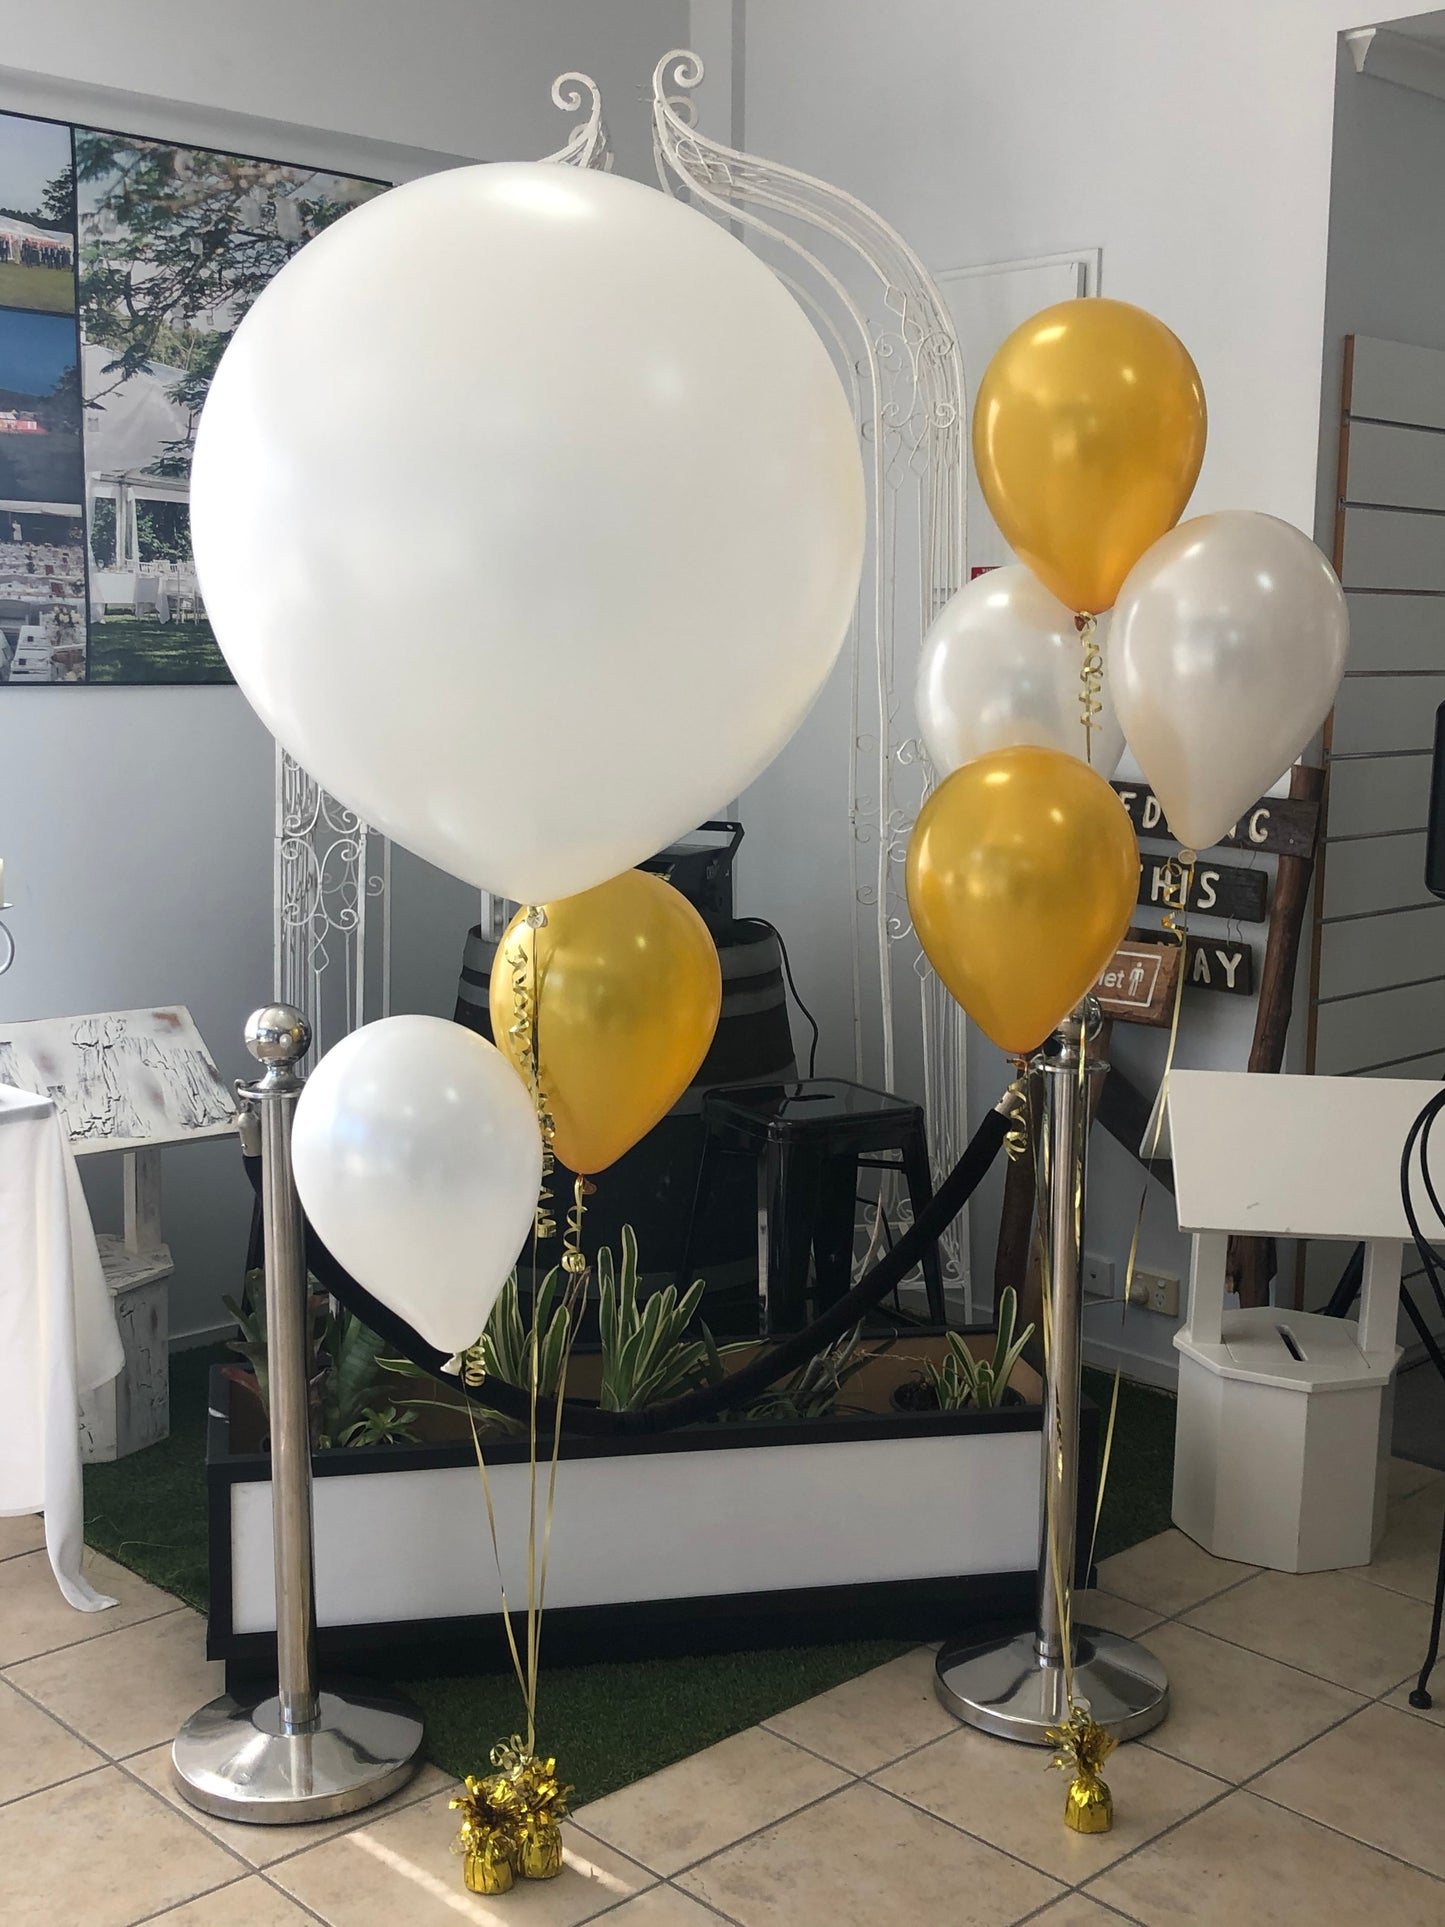 90cm & 60cm helium filled balloons